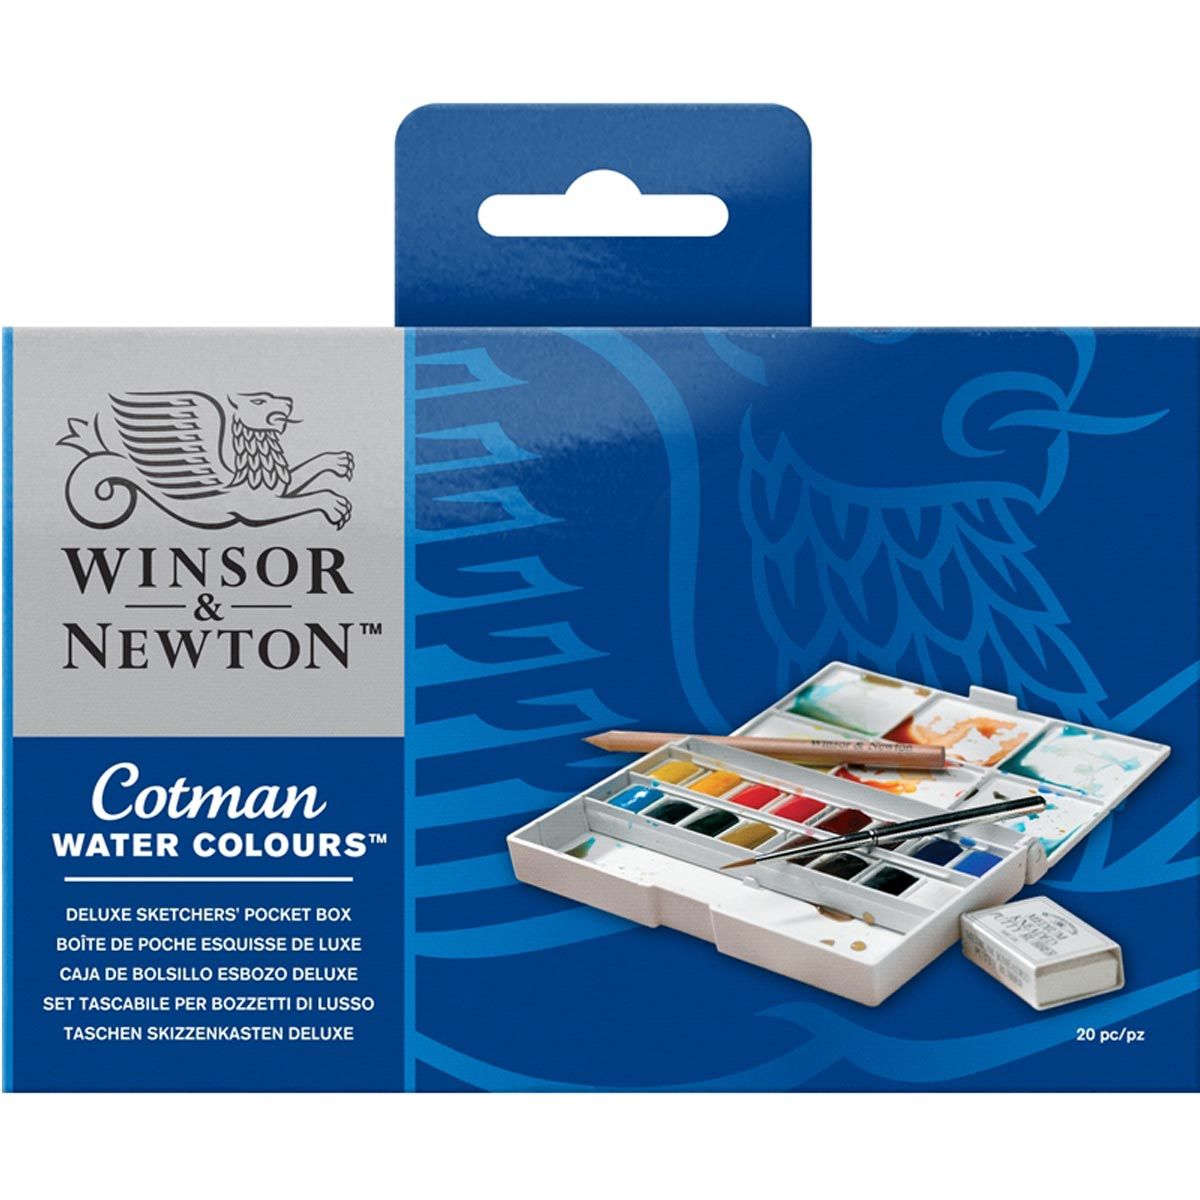 Winsor & Newton Cotman Watercolour Deluxe Sketchers Pocket Box